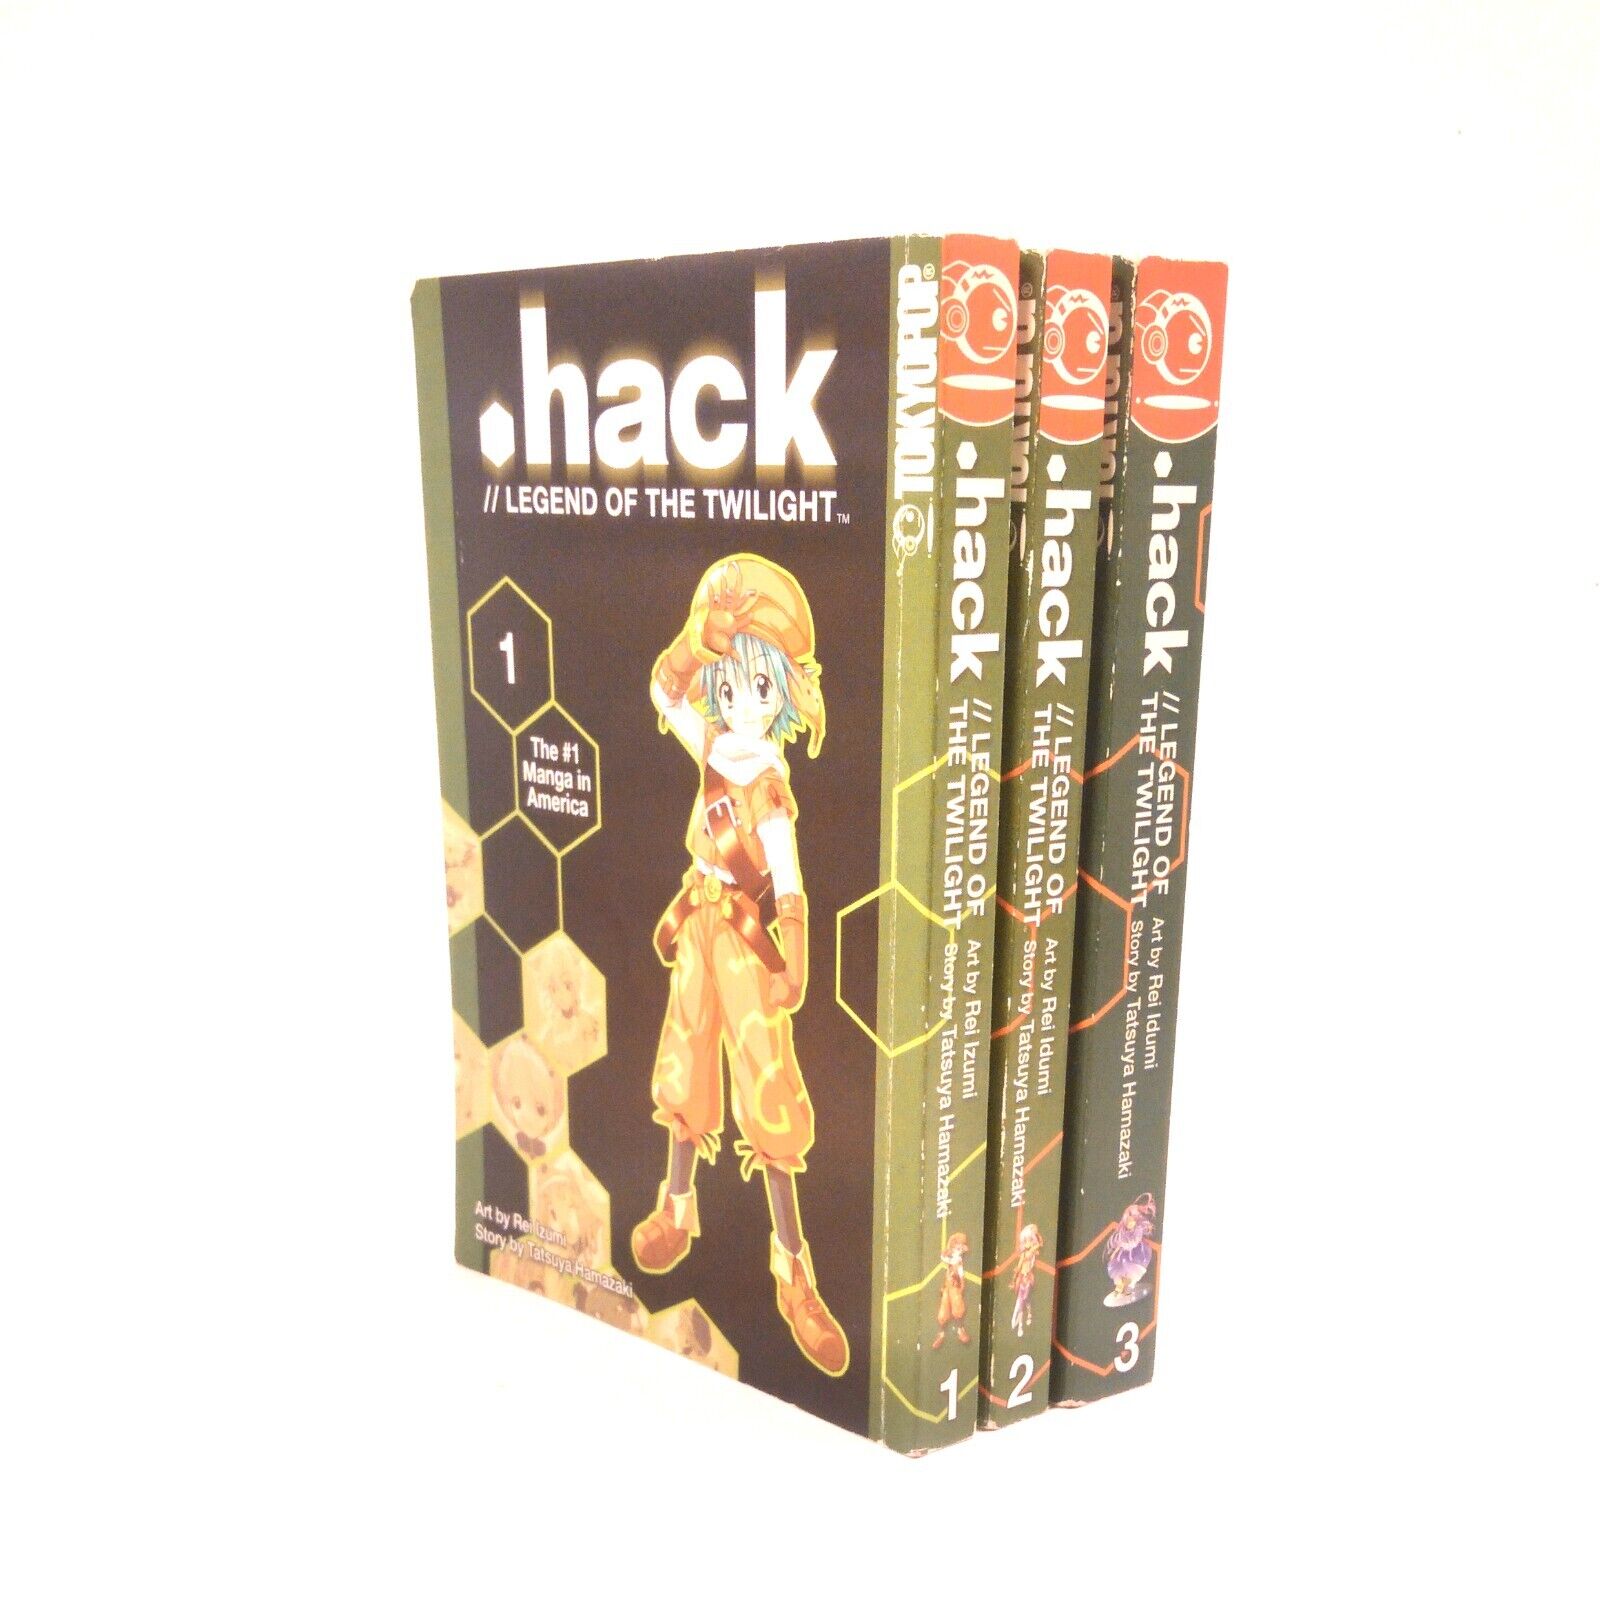 .hack Legend of the Twilight  dot hack Lot English Manga Vol. 1 - 3 Complete Set